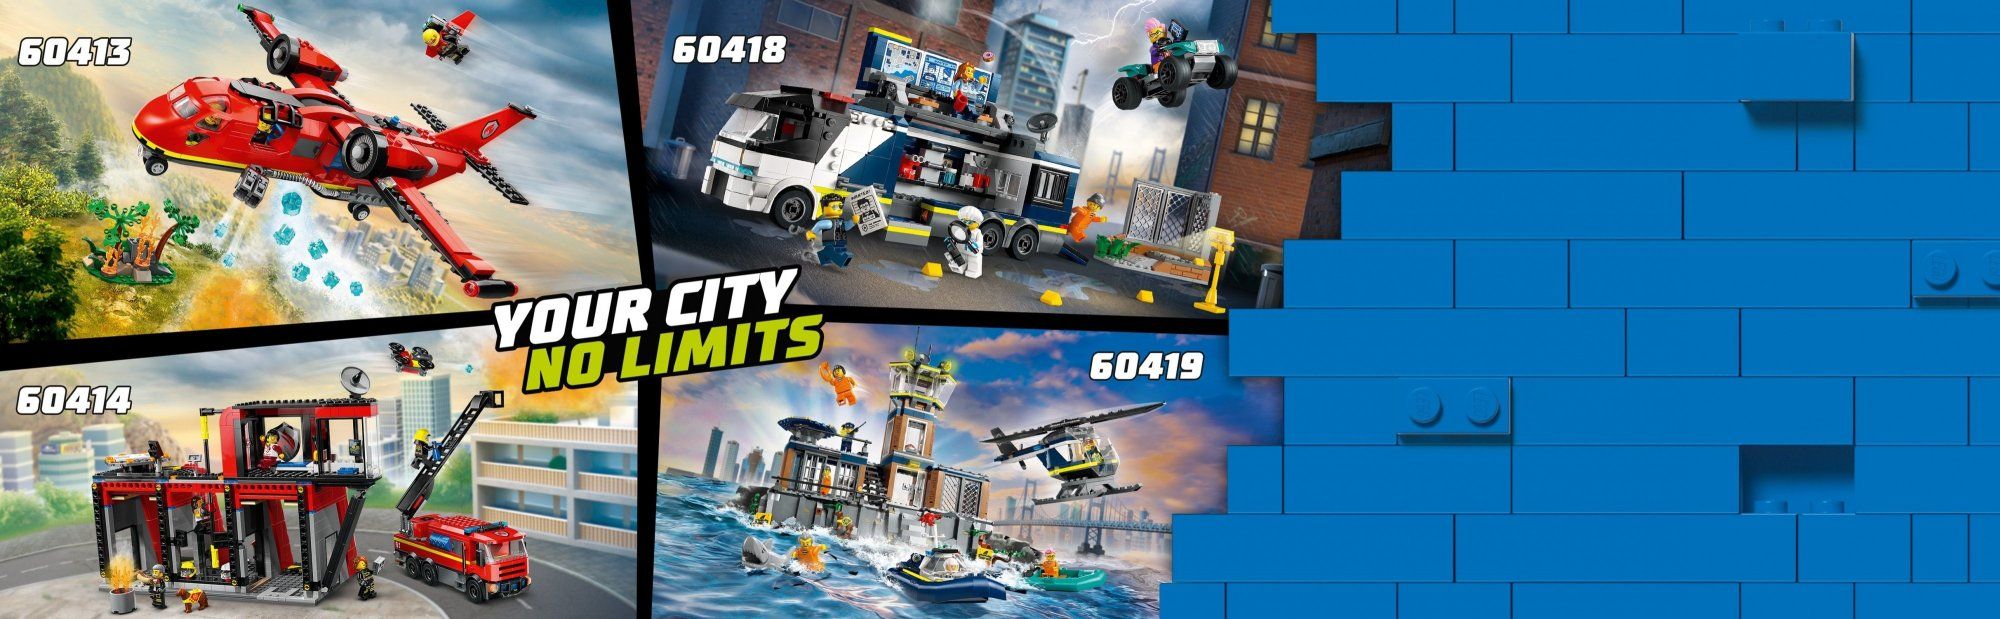 LEGO City 60414 Hasičská stanica s hasičským vozidlom